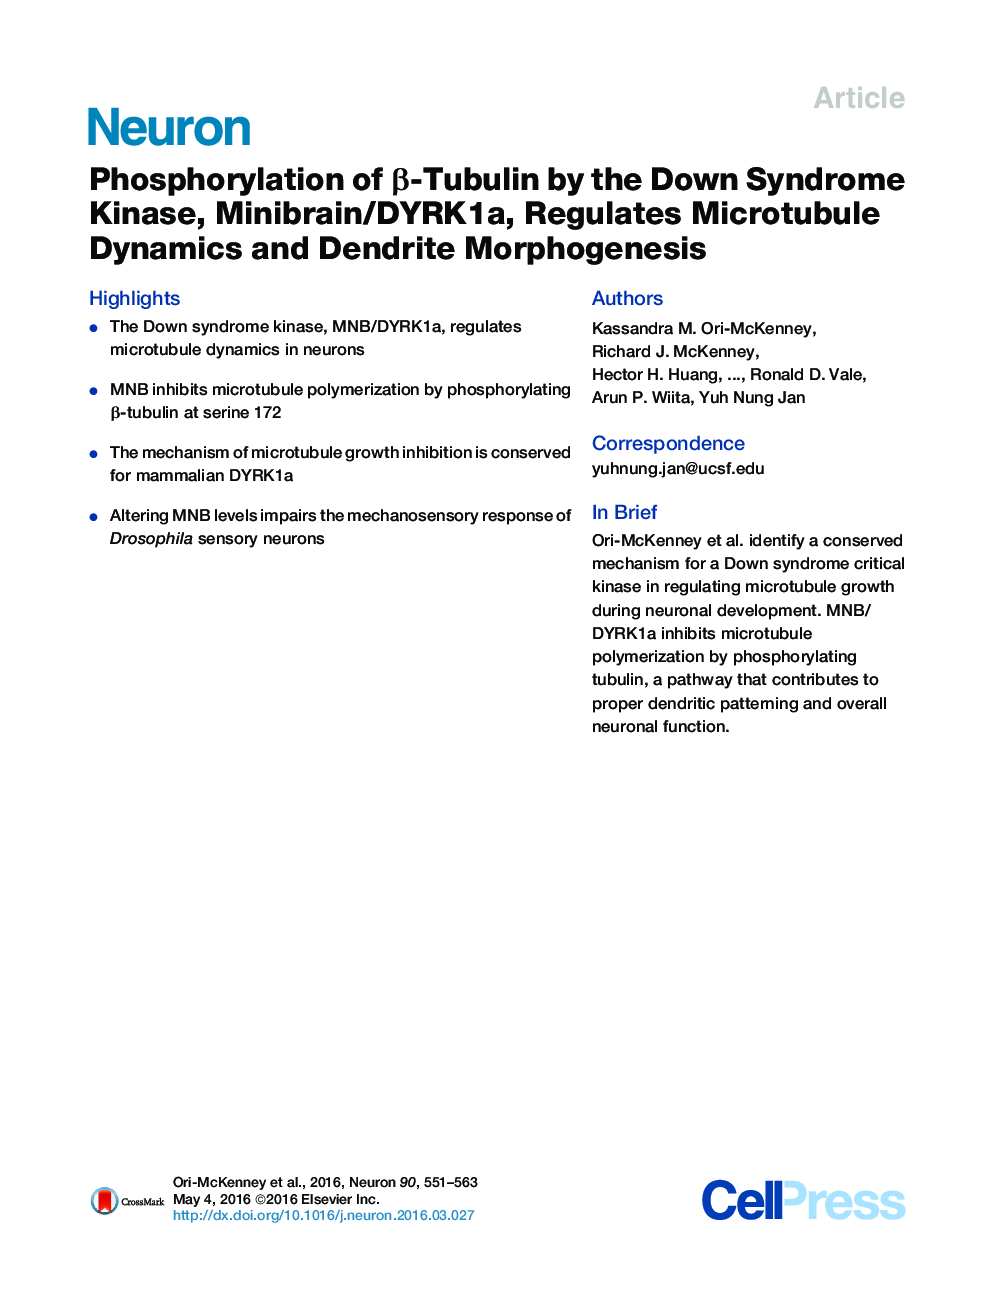 Phosphorylation of β-Tubulin by the Down Syndrome Kinase, Minibrain/DYRK1a, Regulates Microtubule Dynamics and Dendrite Morphogenesis